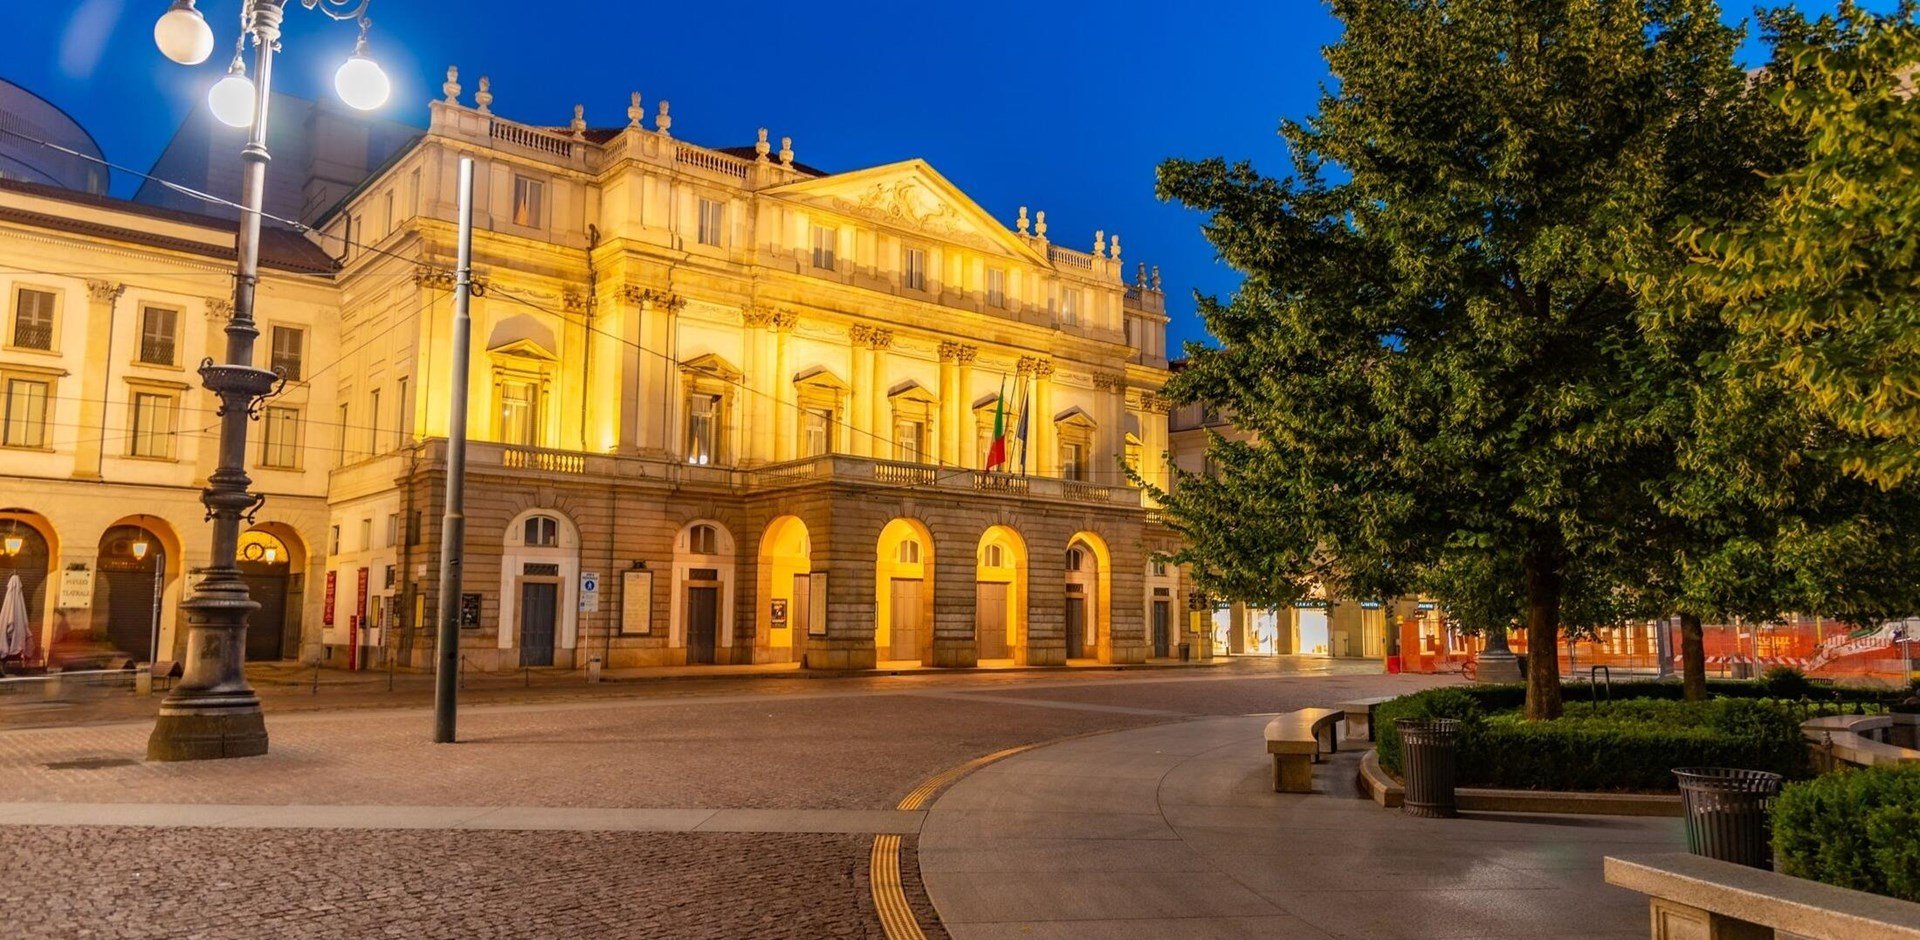 Night view of Teatro alla Scala in Milano, Italy